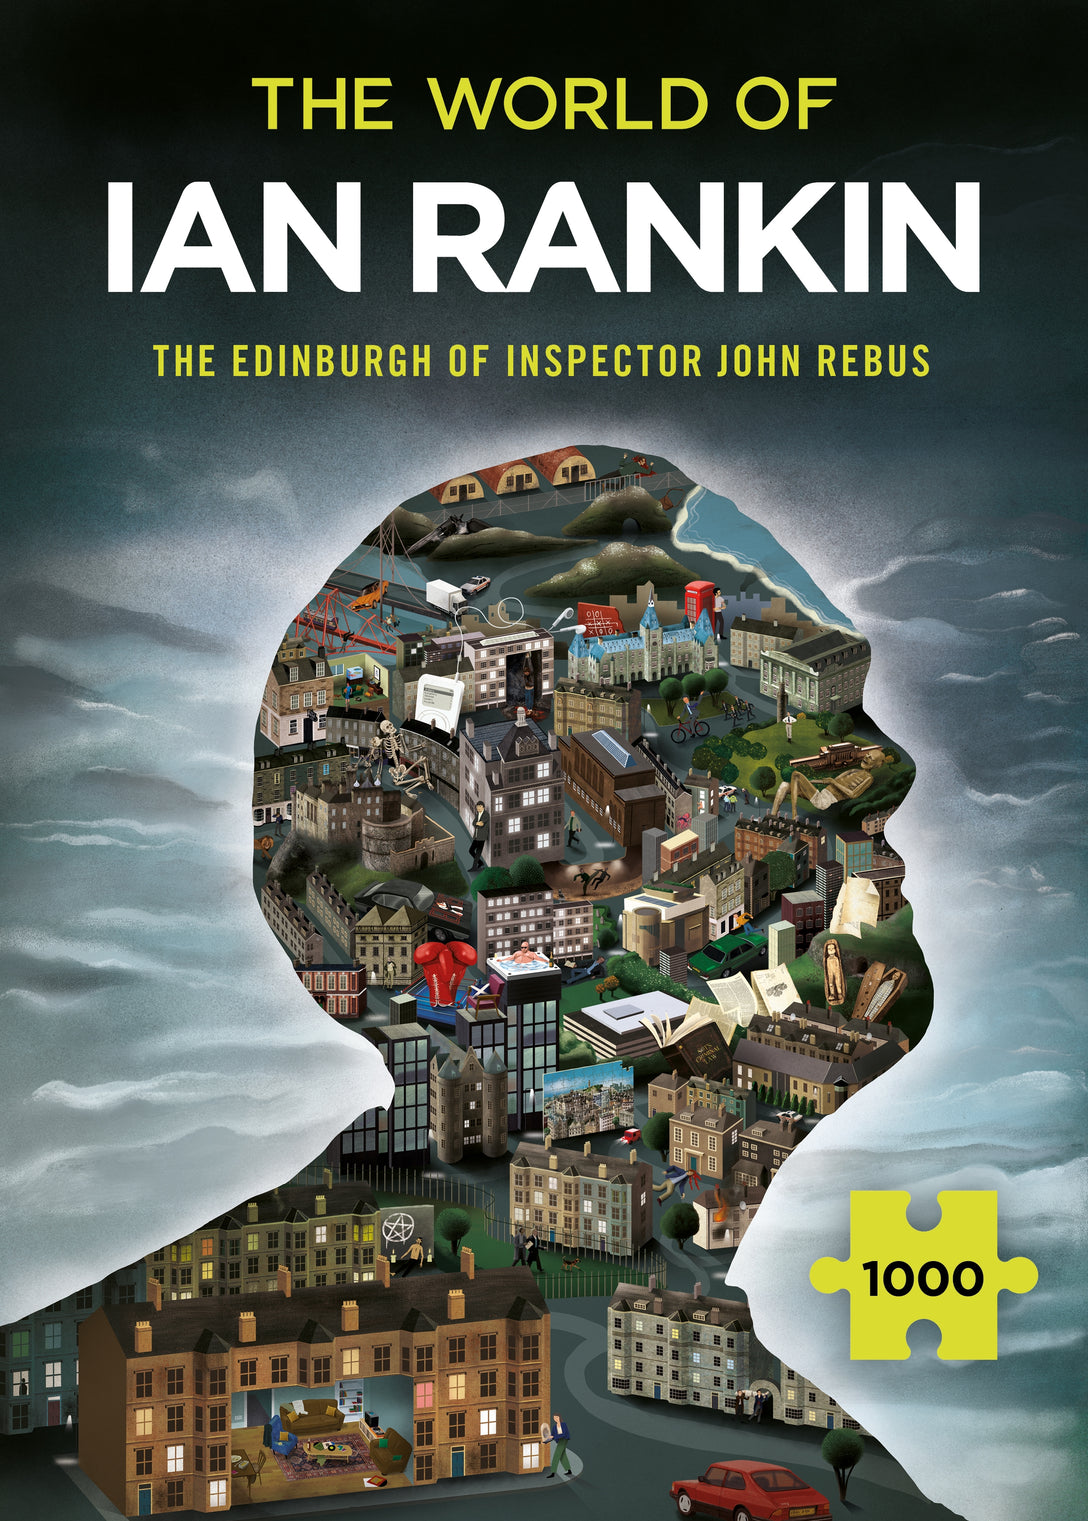 The World of Ian Rankin: The Edinburgh of Inspector John Rebus by Barry Falls, Ian Rankin